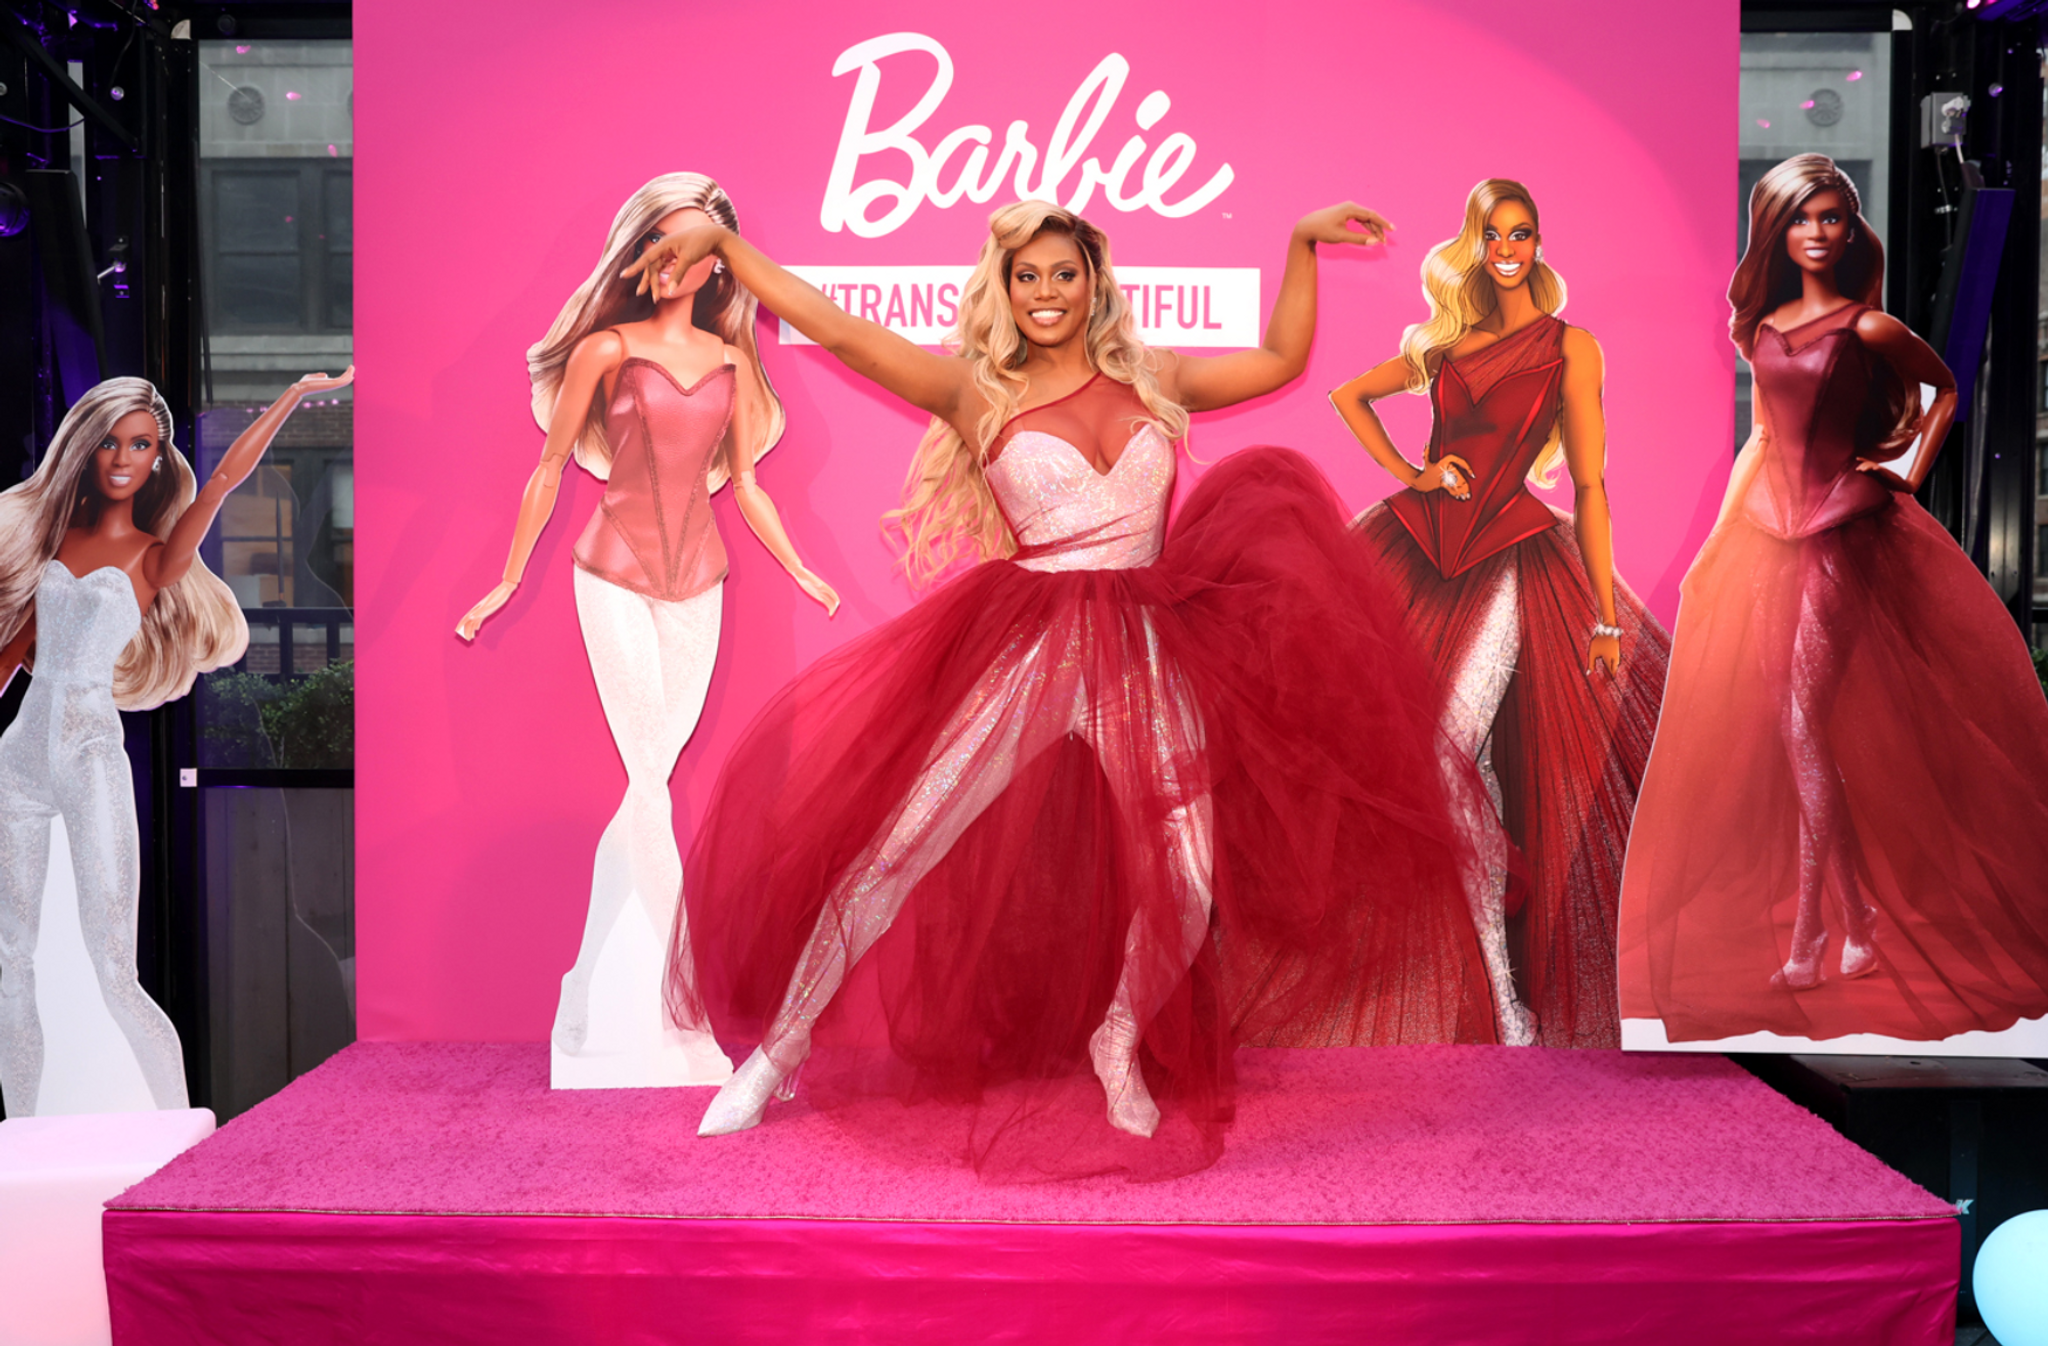 Mattel speaks to inclusivity with transgender Barbie